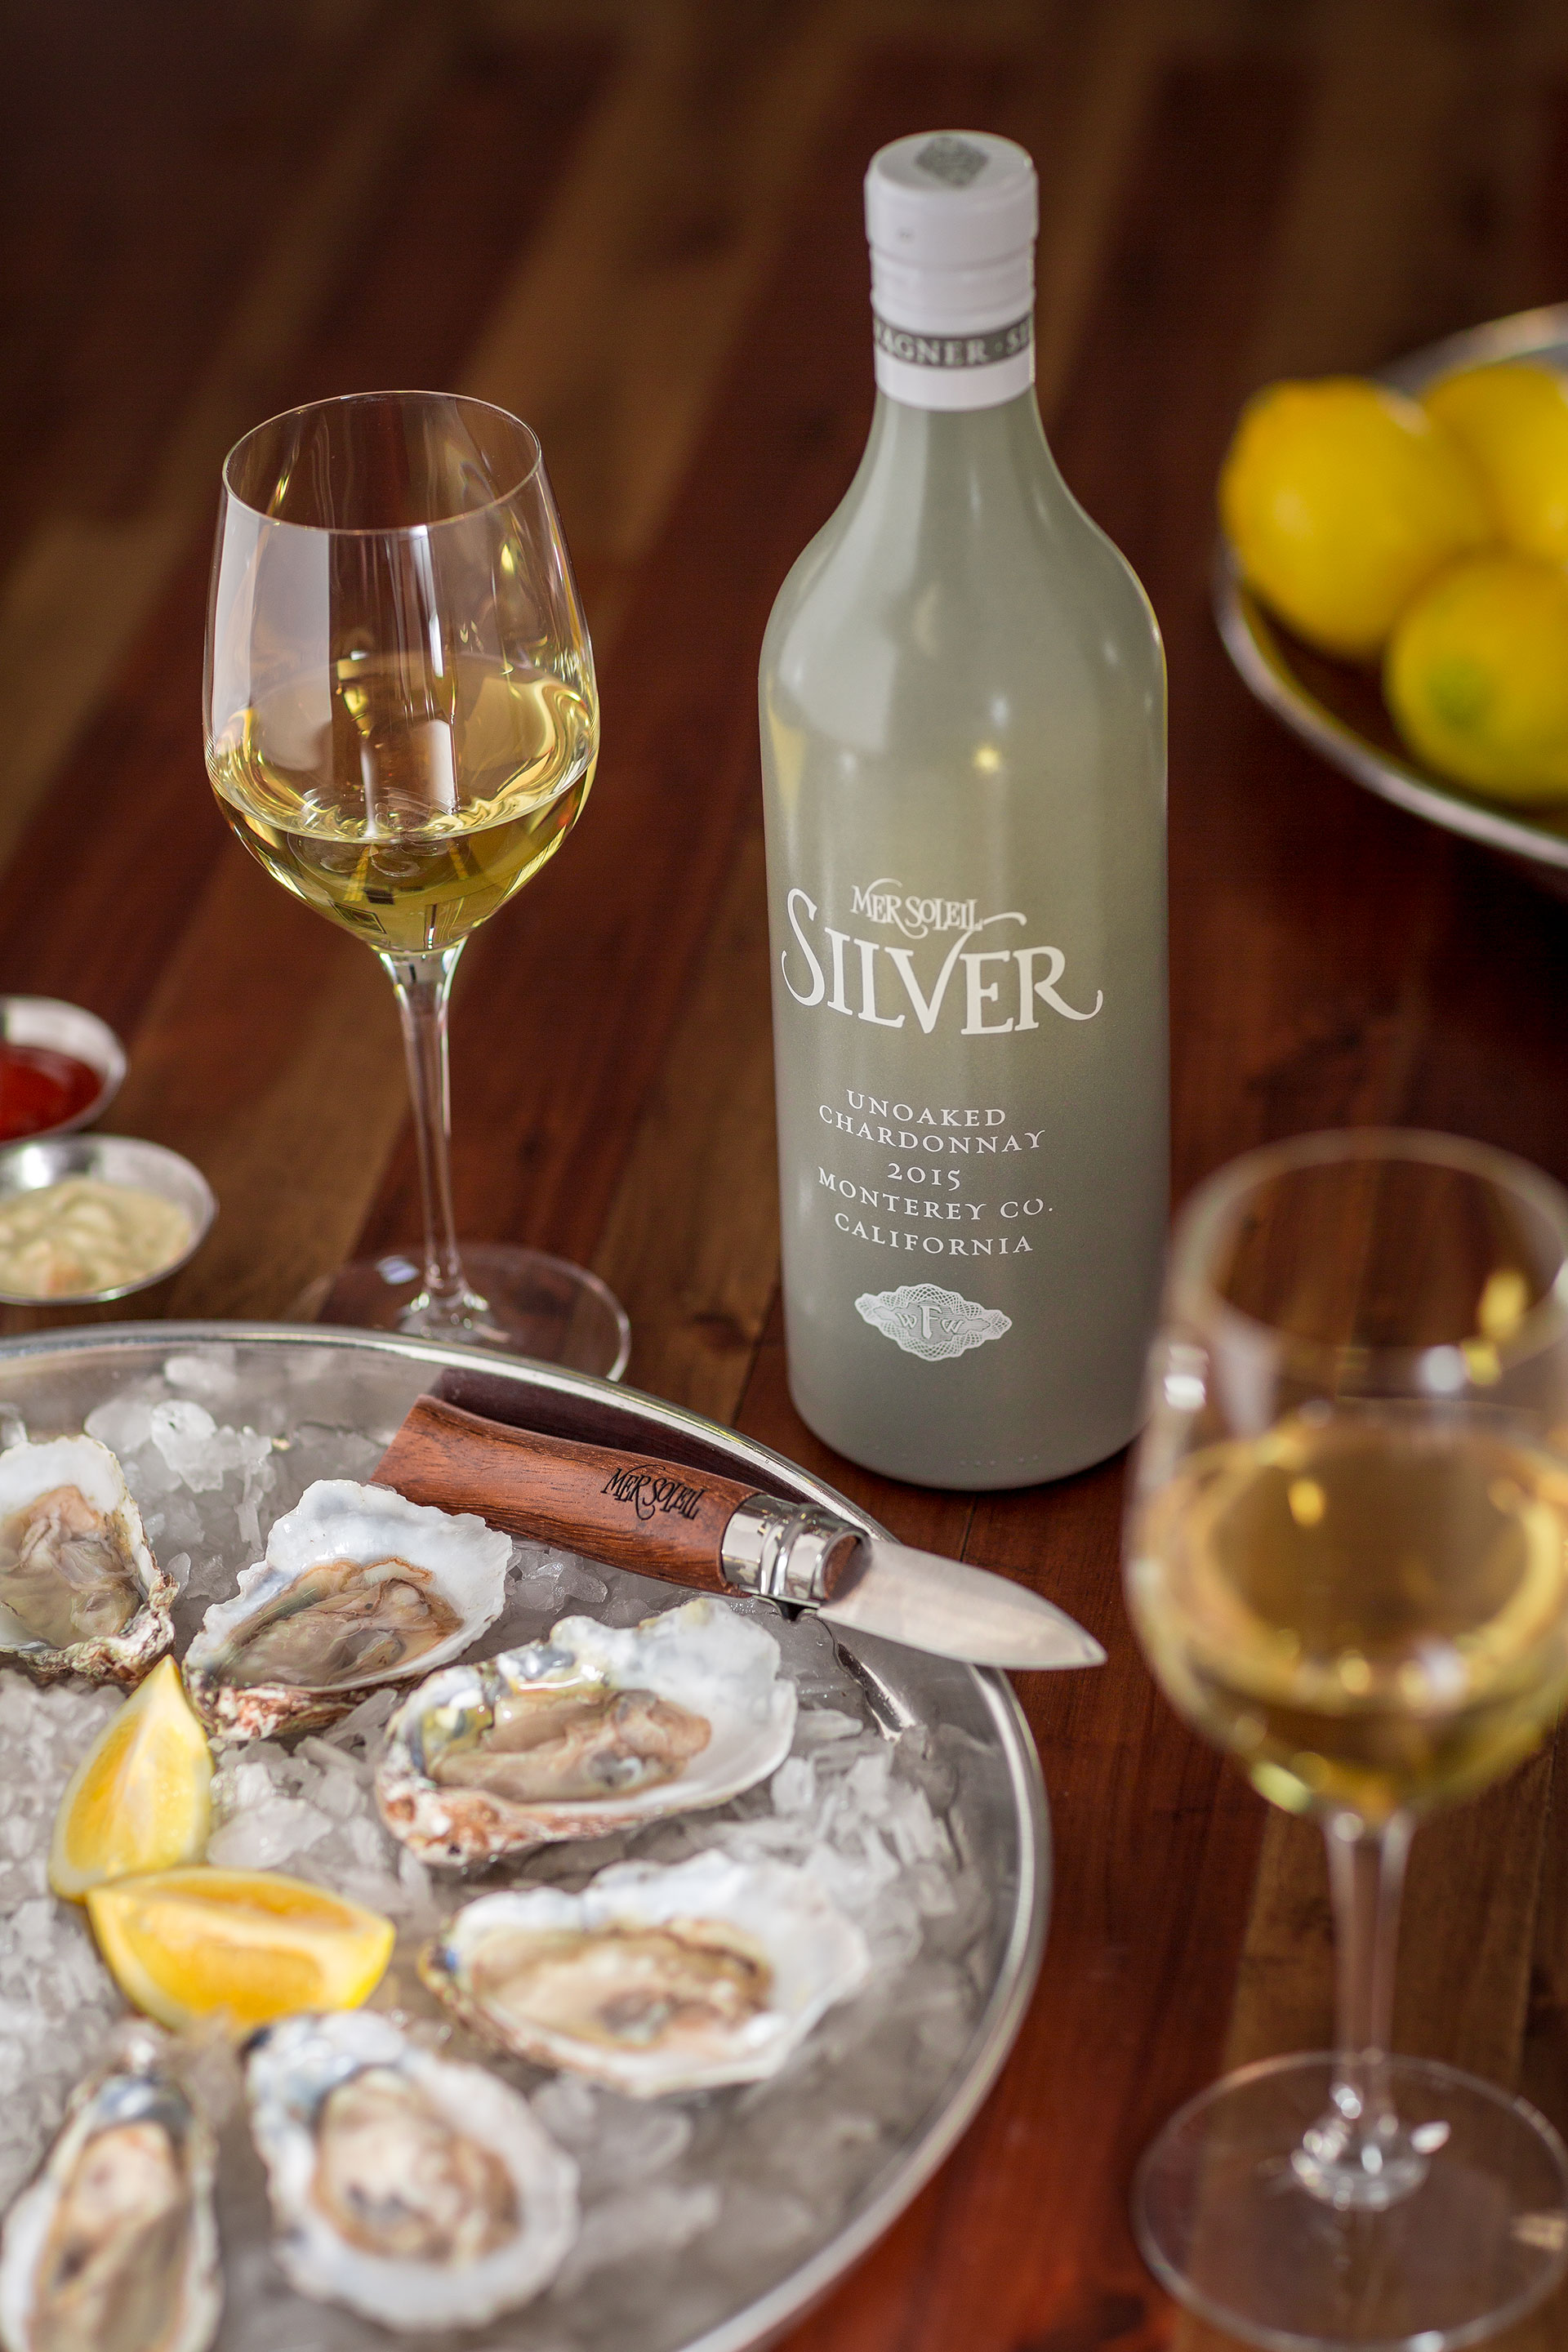 2015-MerSoleil-Silver-Chardonnay-Oysters-5437-by-Frank-Gutierrez